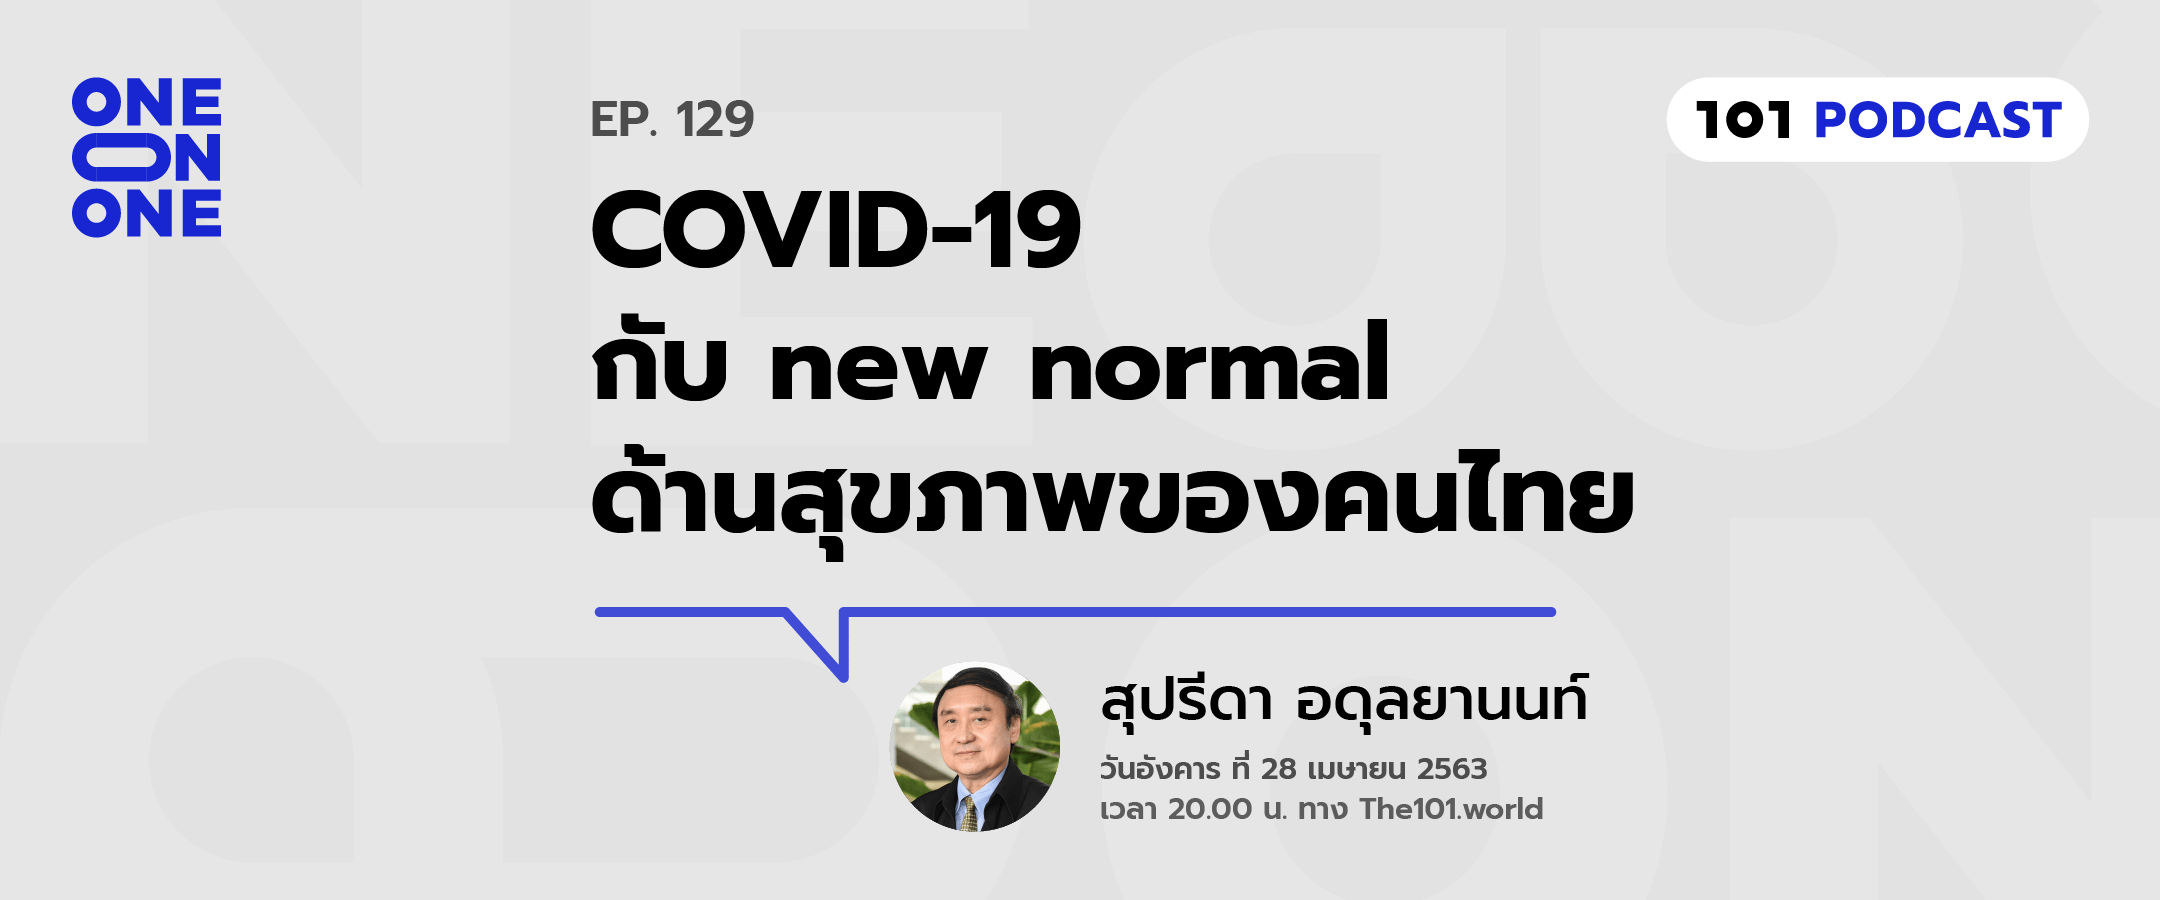 101 One-On-One Ep.129 : COVID-19 กับ new normal ด้านสุขภาพของคนไทย